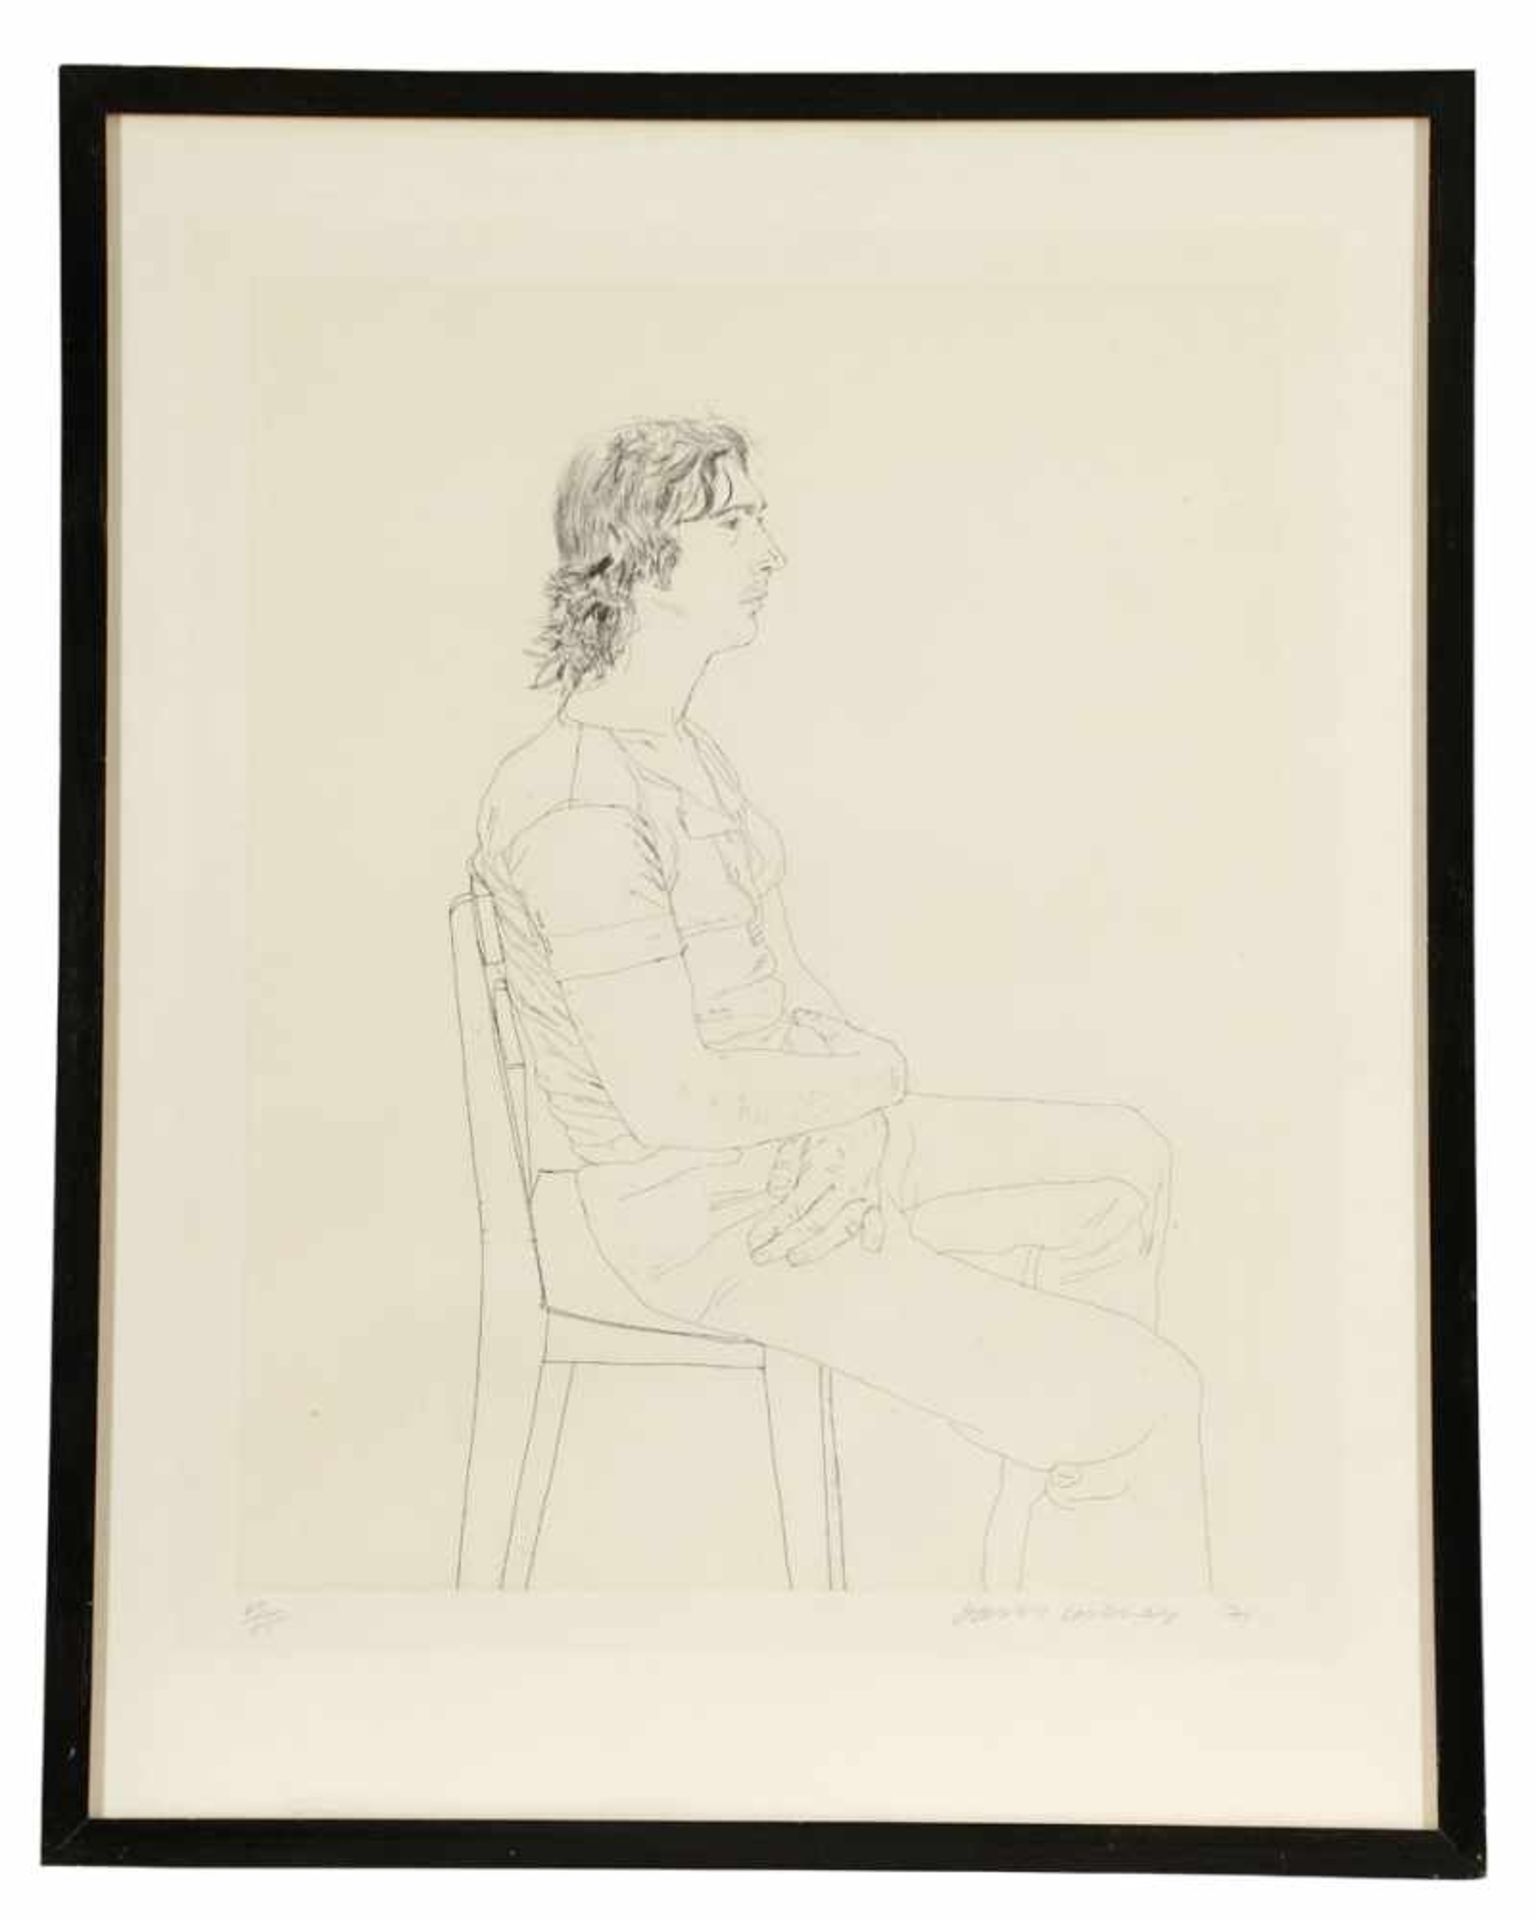 David Hockney 1937 Bradford/Yorkshire - lebt in London und Los Angeles - "Maurice Payne" - - Image 2 of 2